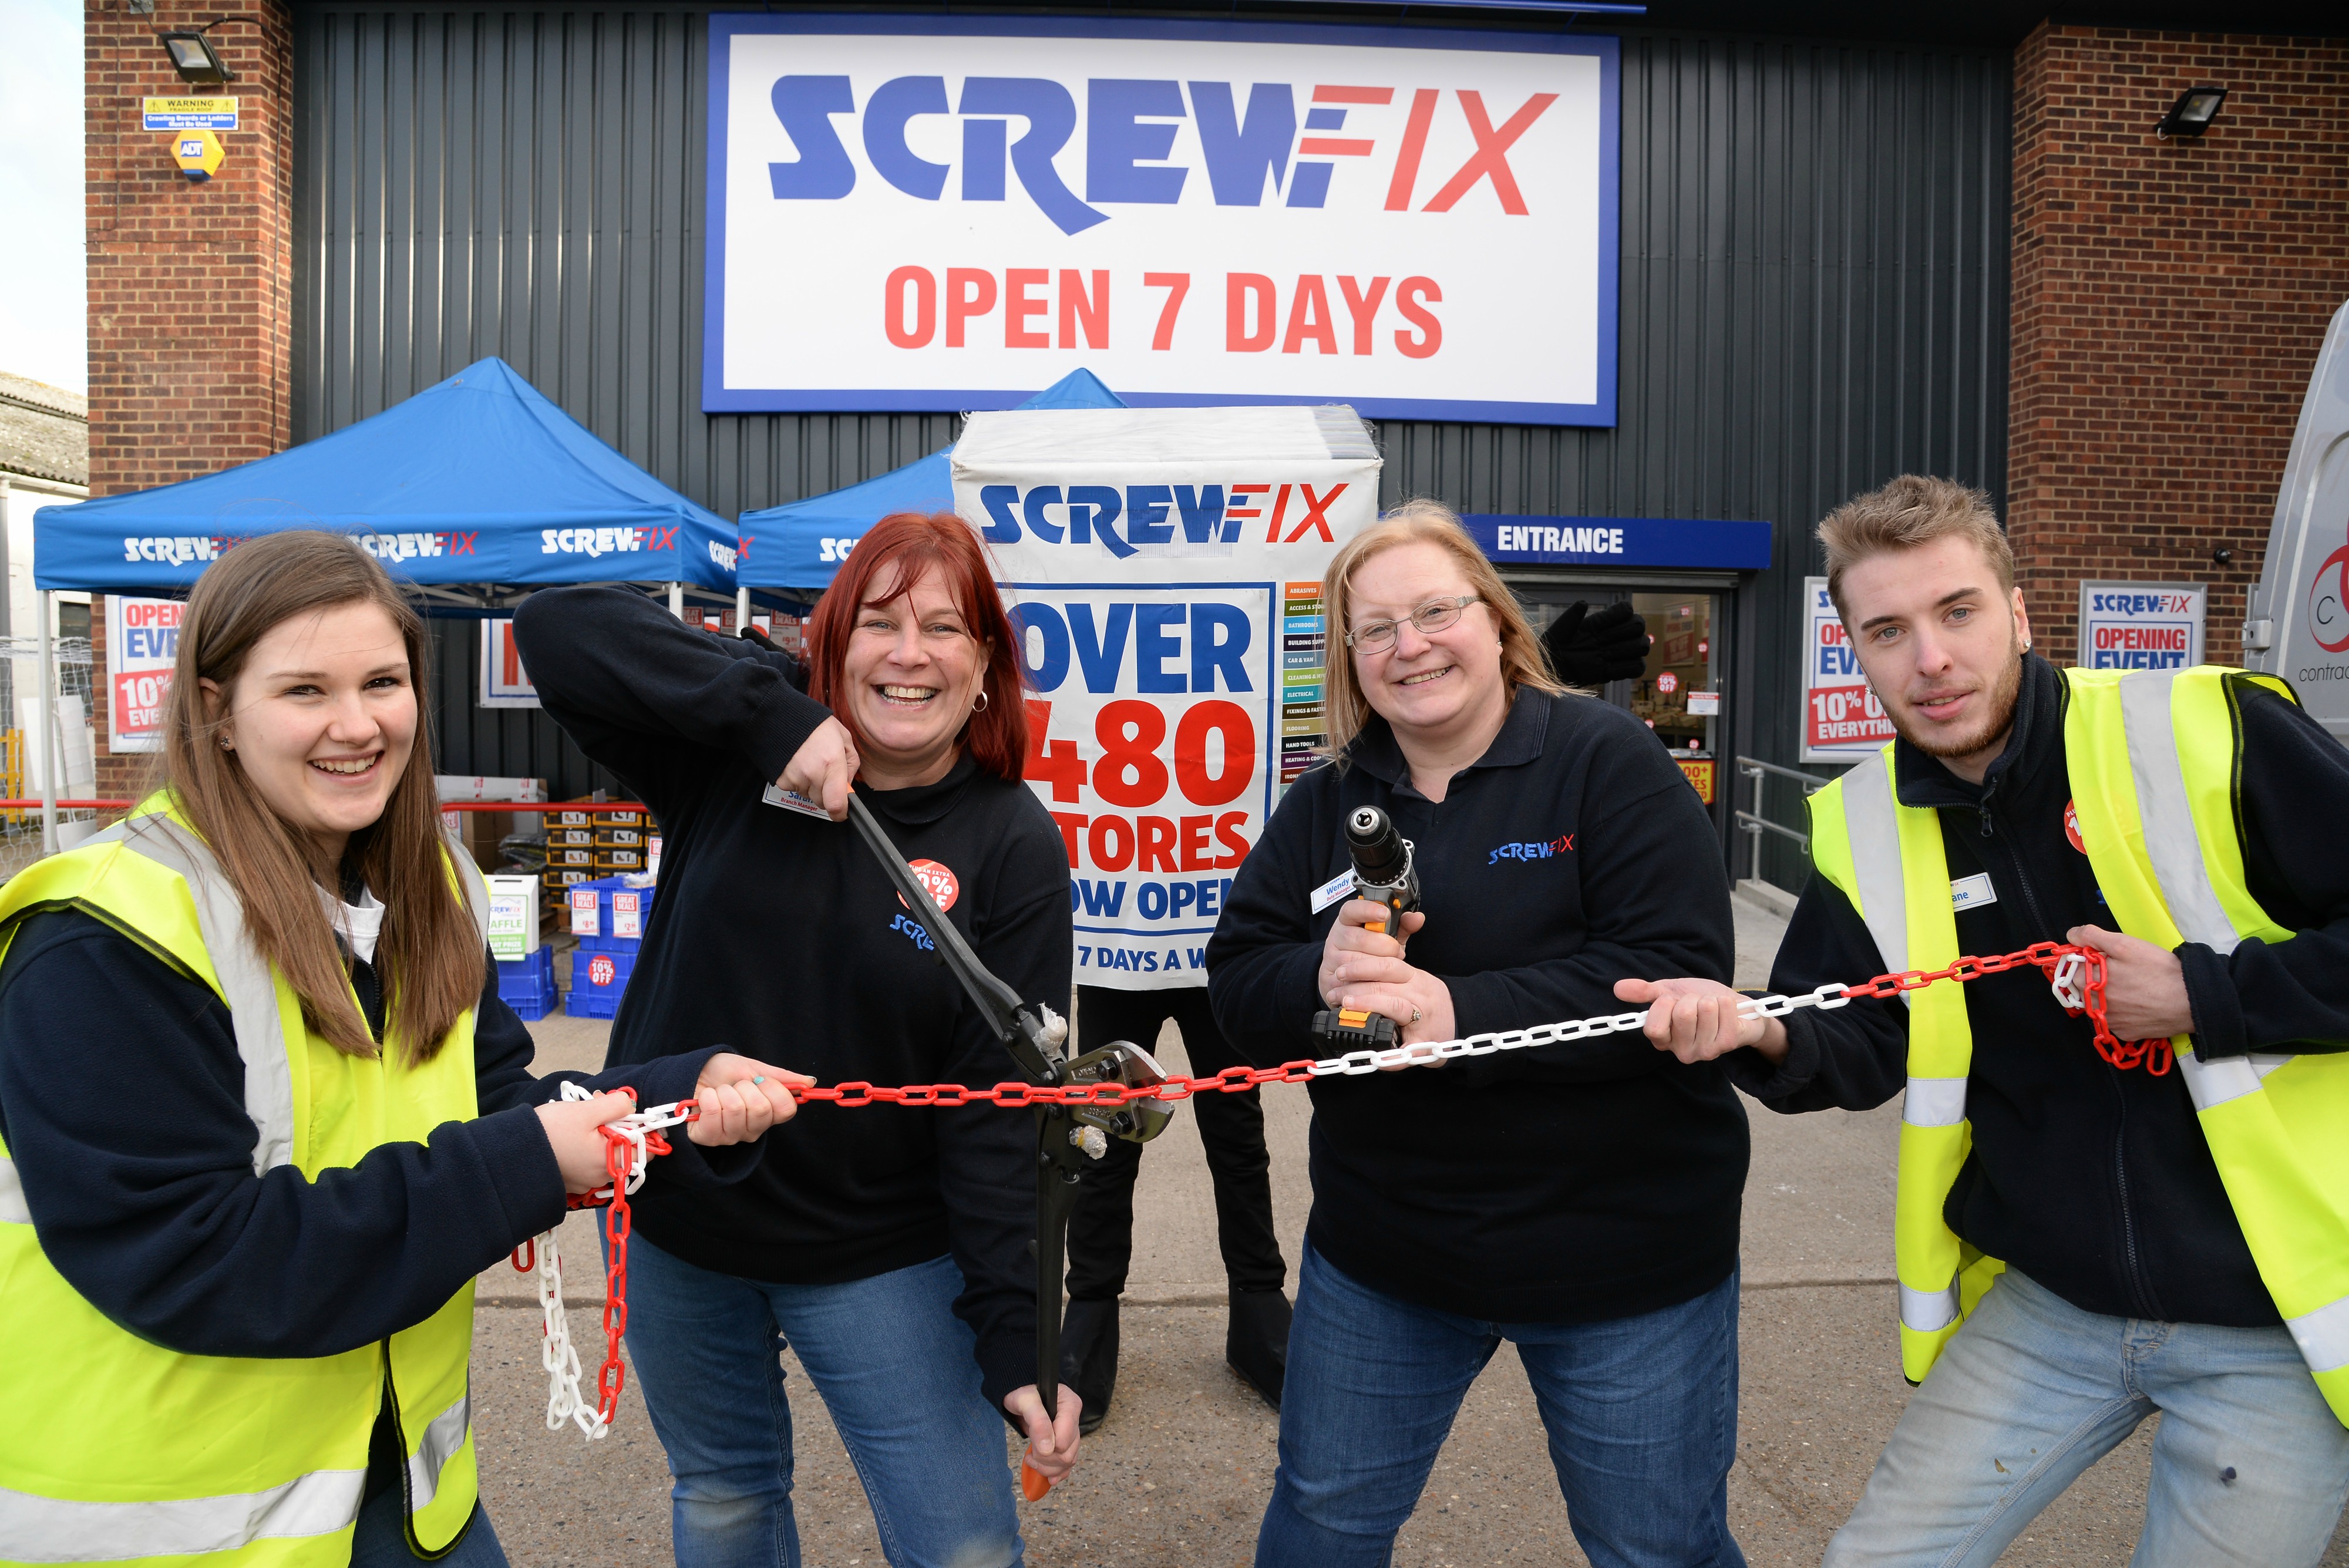 Epping celebrates new Screwfix store opening